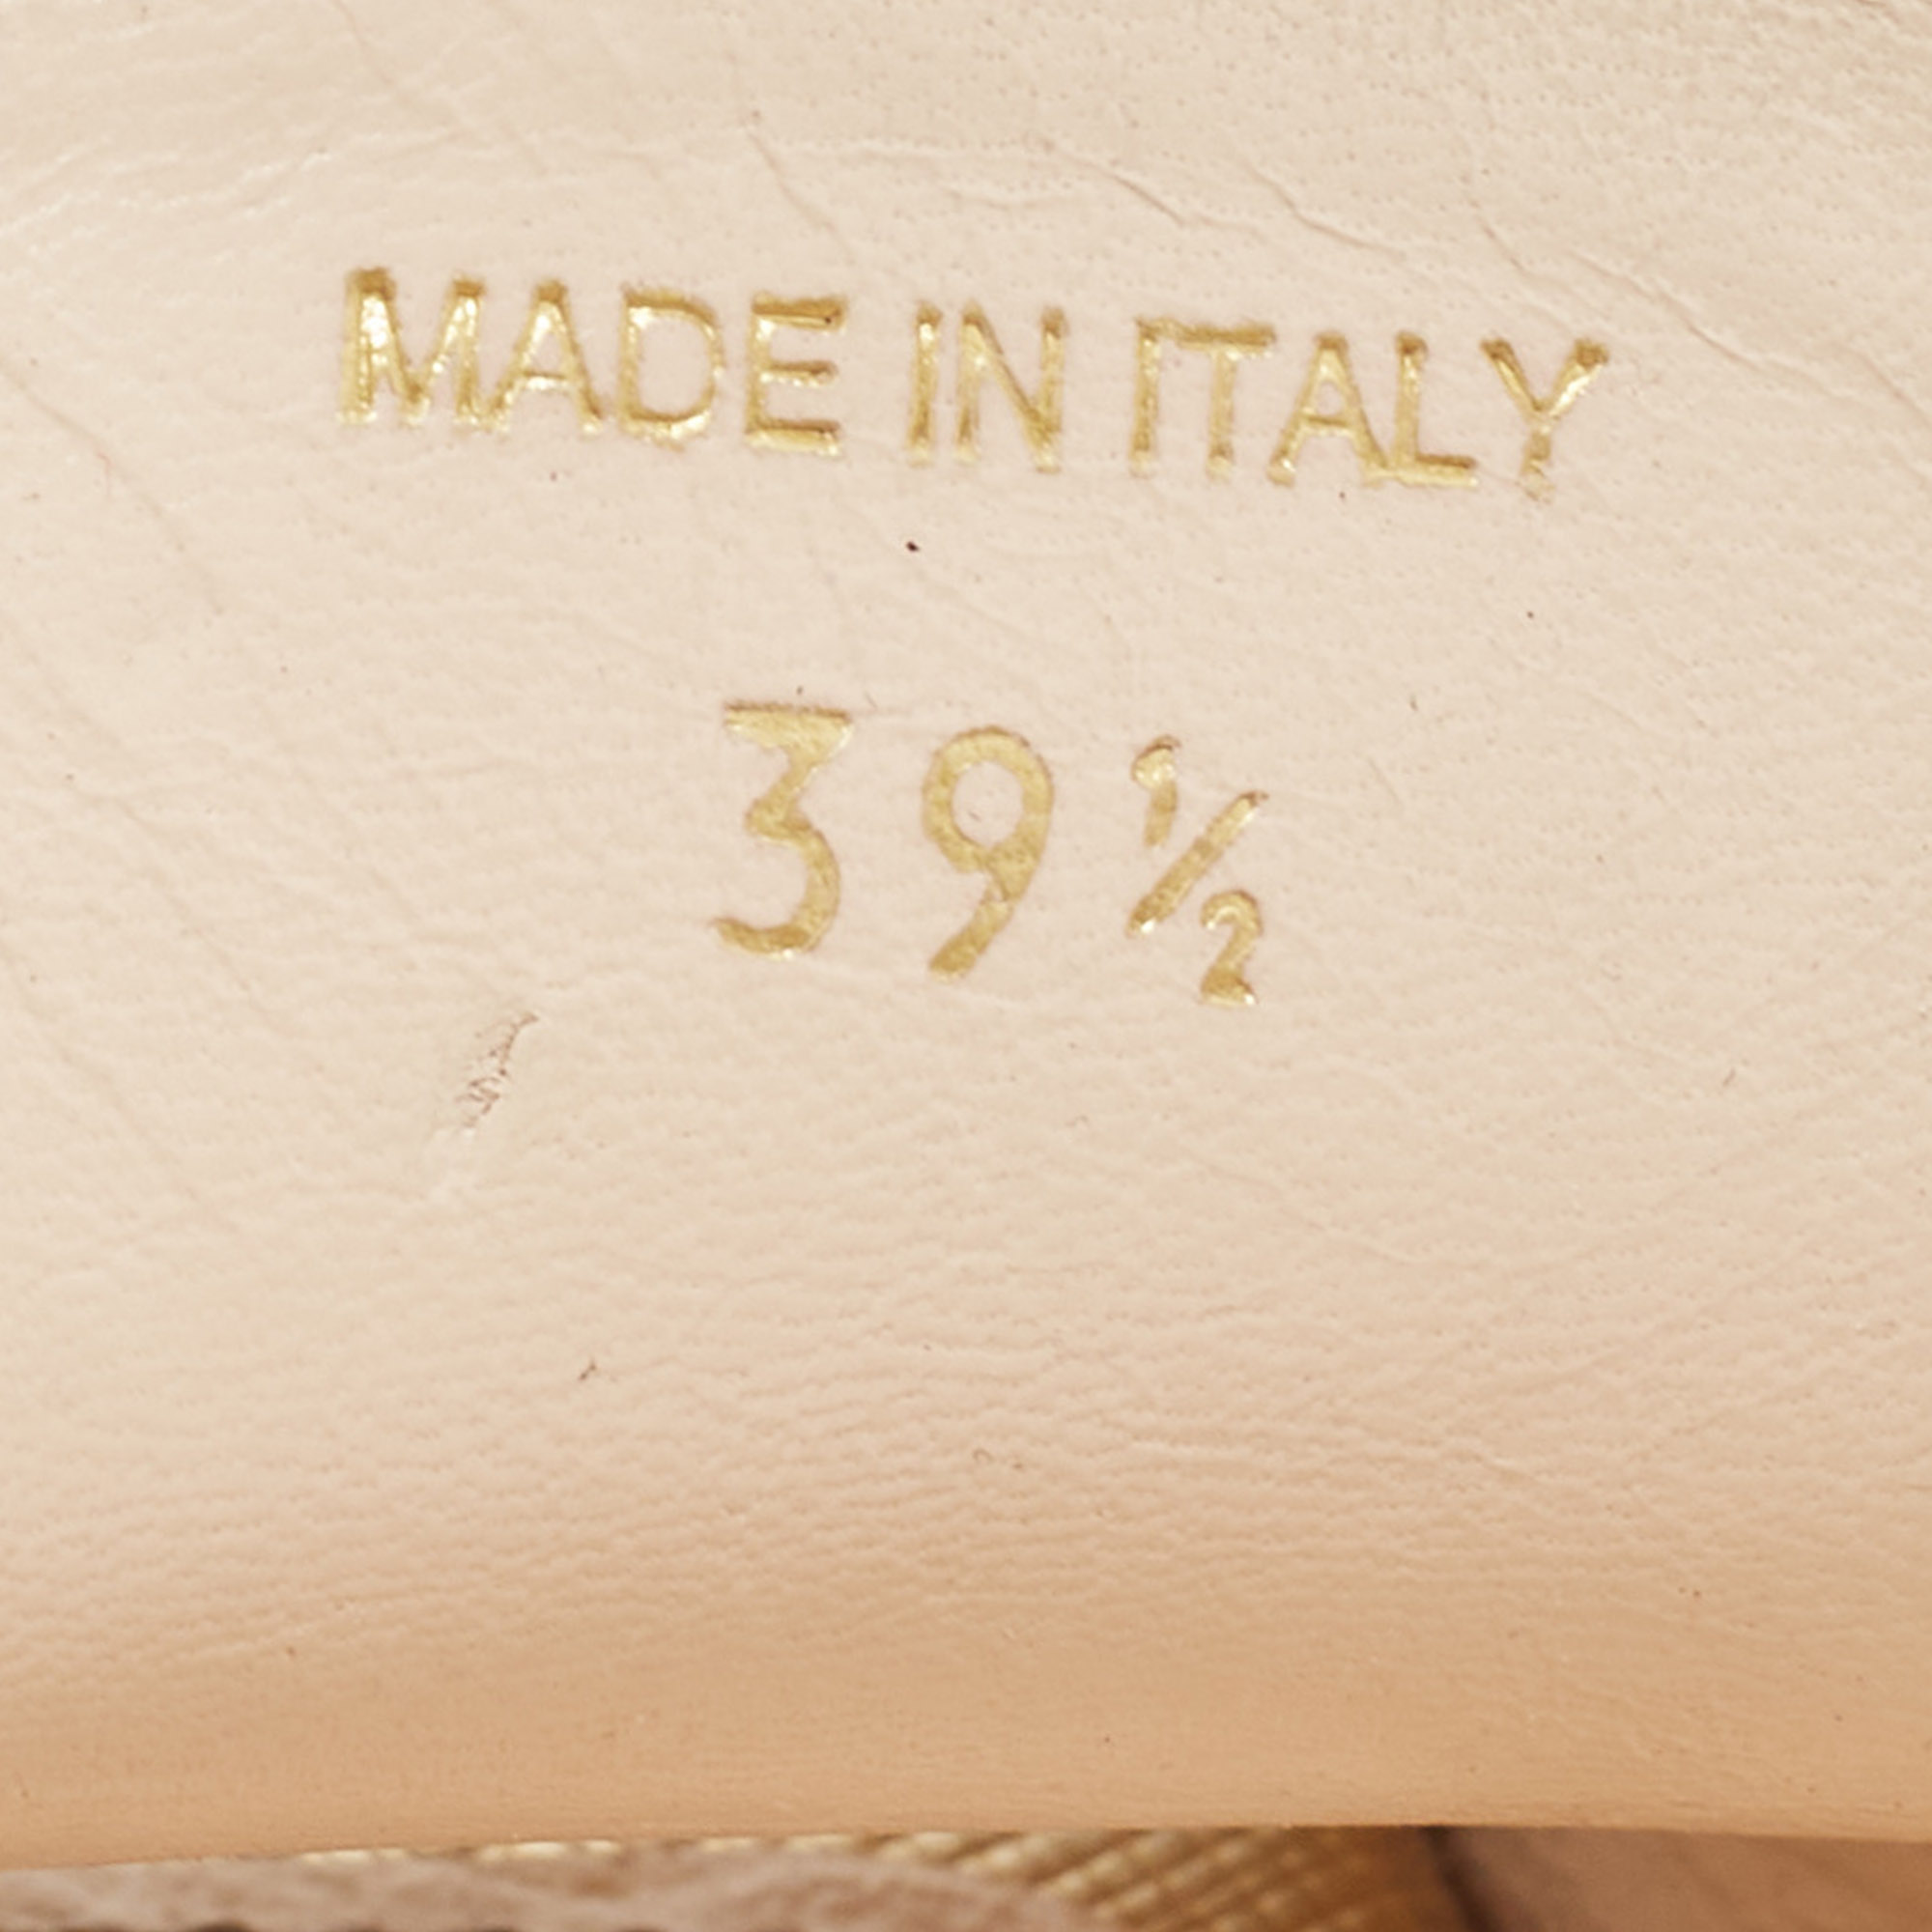 Prada Gold Patent Leather Wedge Platform Slide Sandals Size 39.5